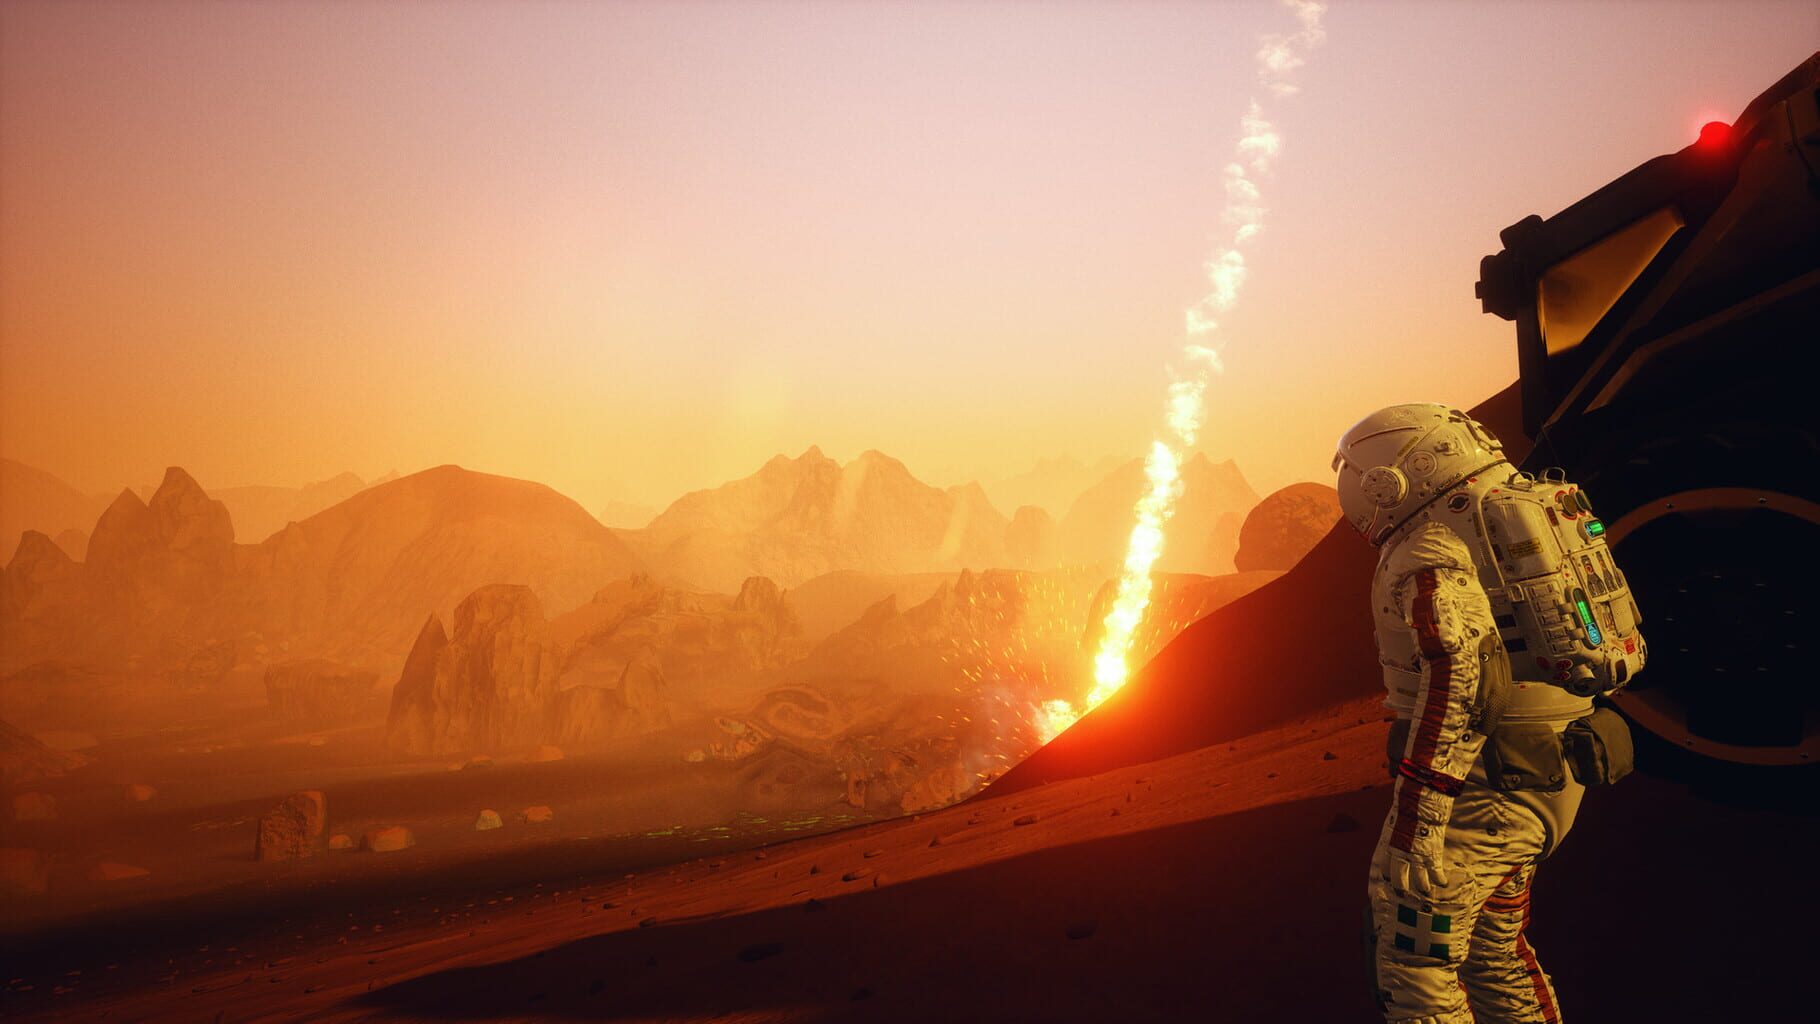 JCB Pioneer: Mars screenshot